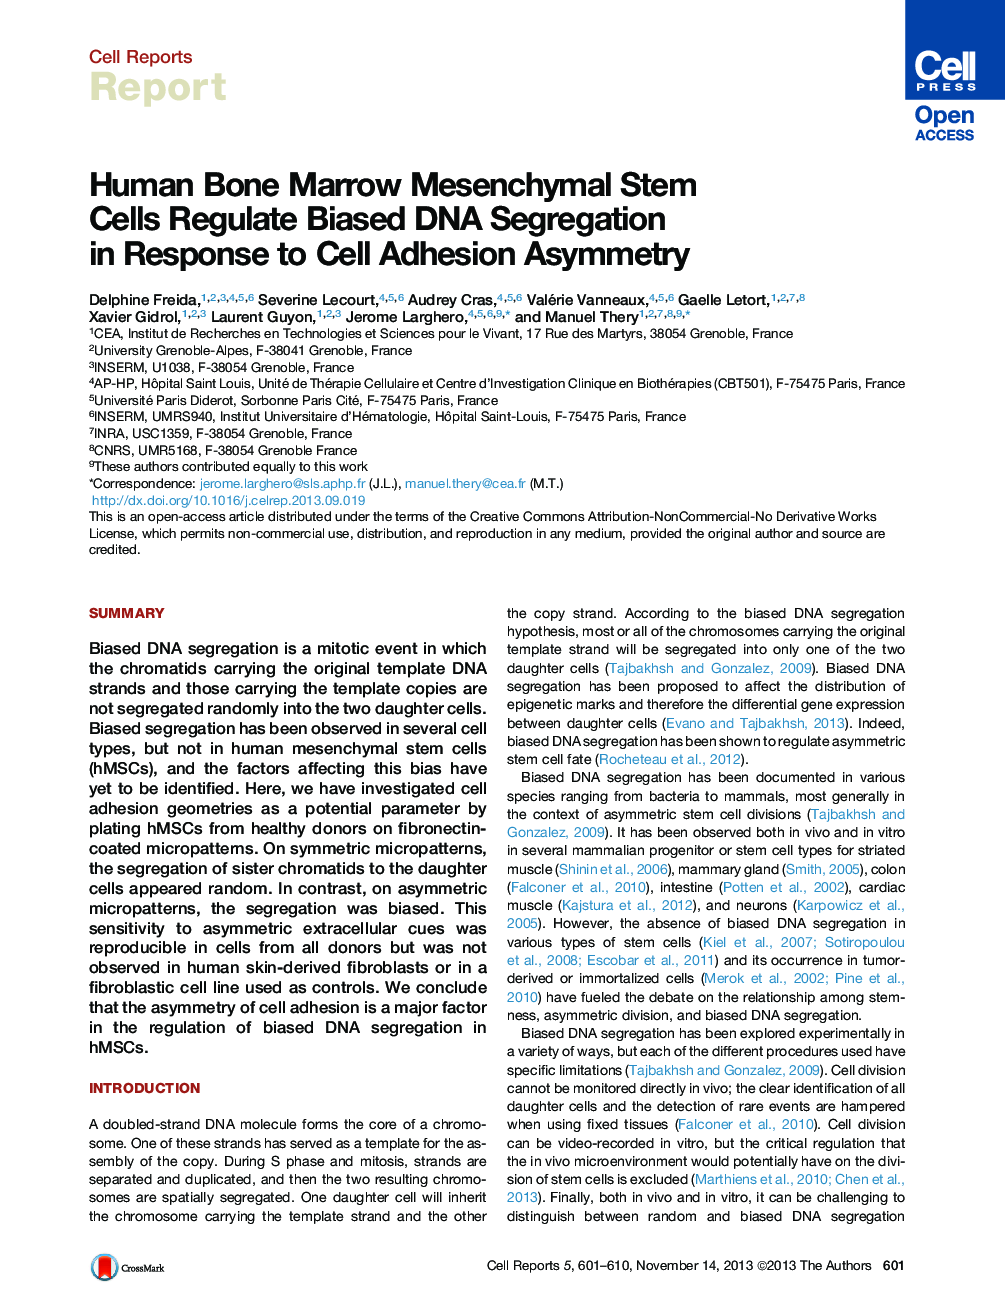 Human Bone Marrow Mesenchymal Stem Cells Regulate Biased DNA Segregation in Response to Cell Adhesion Asymmetry 